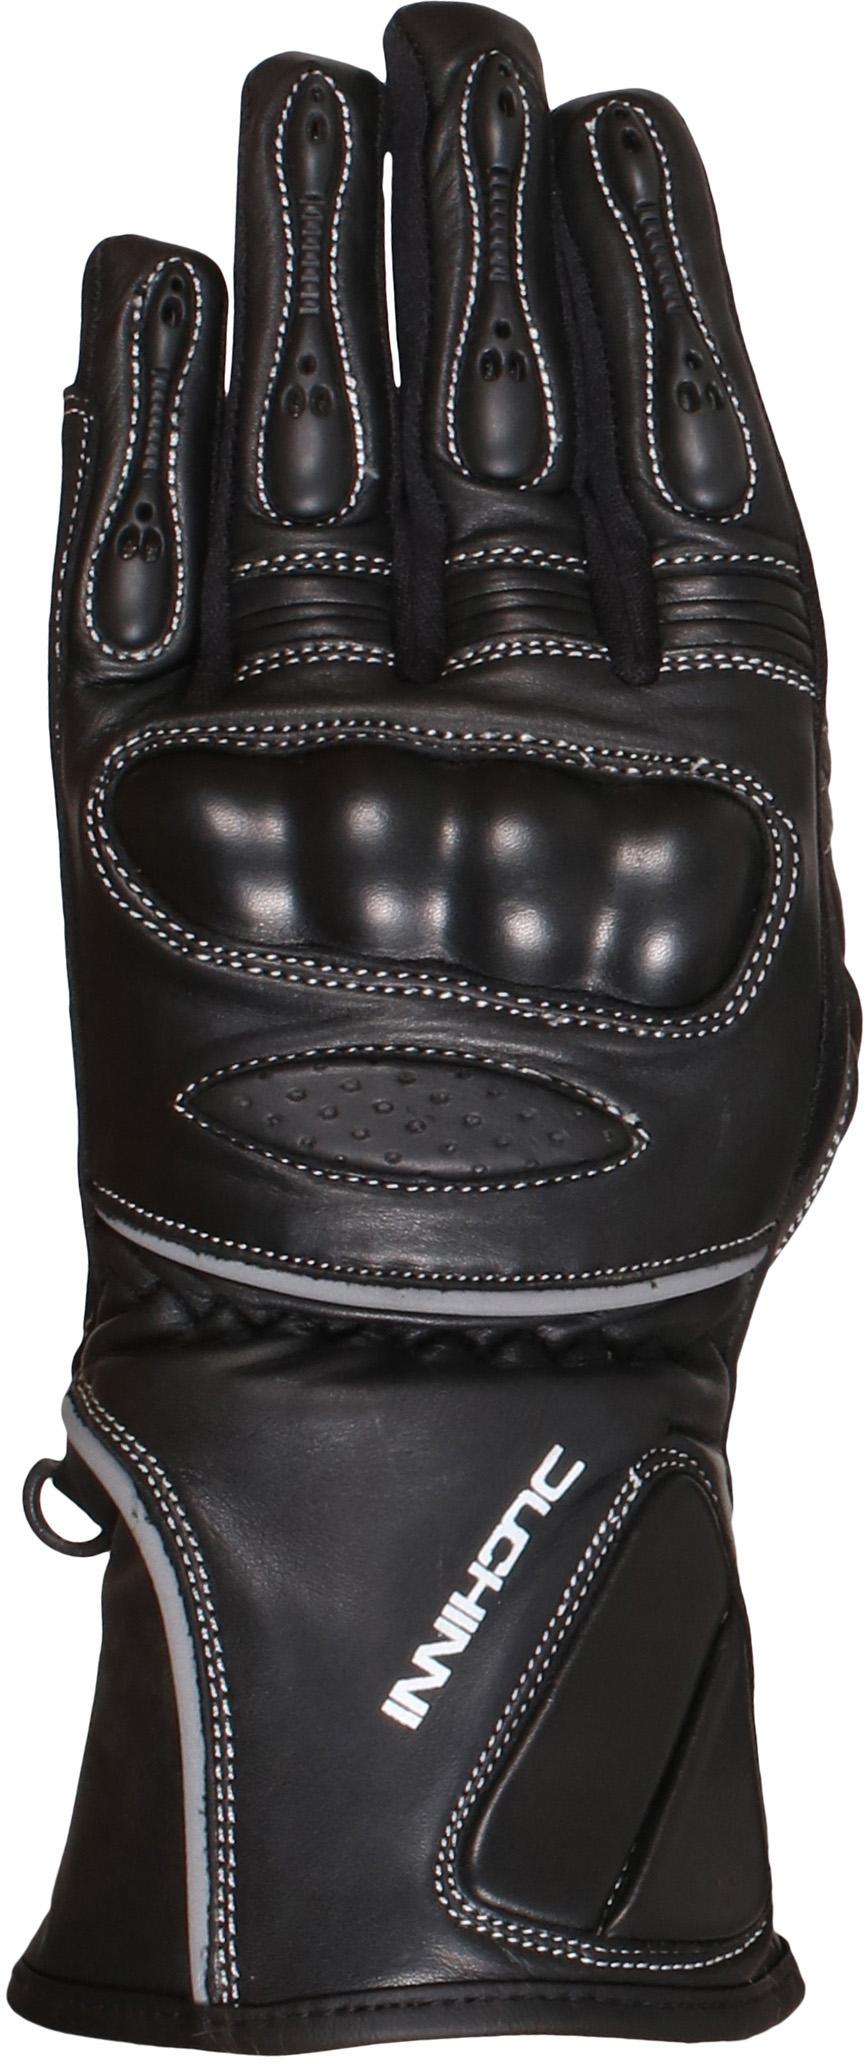 Duchinni Como Motorcycle Gloves - Black, Xl